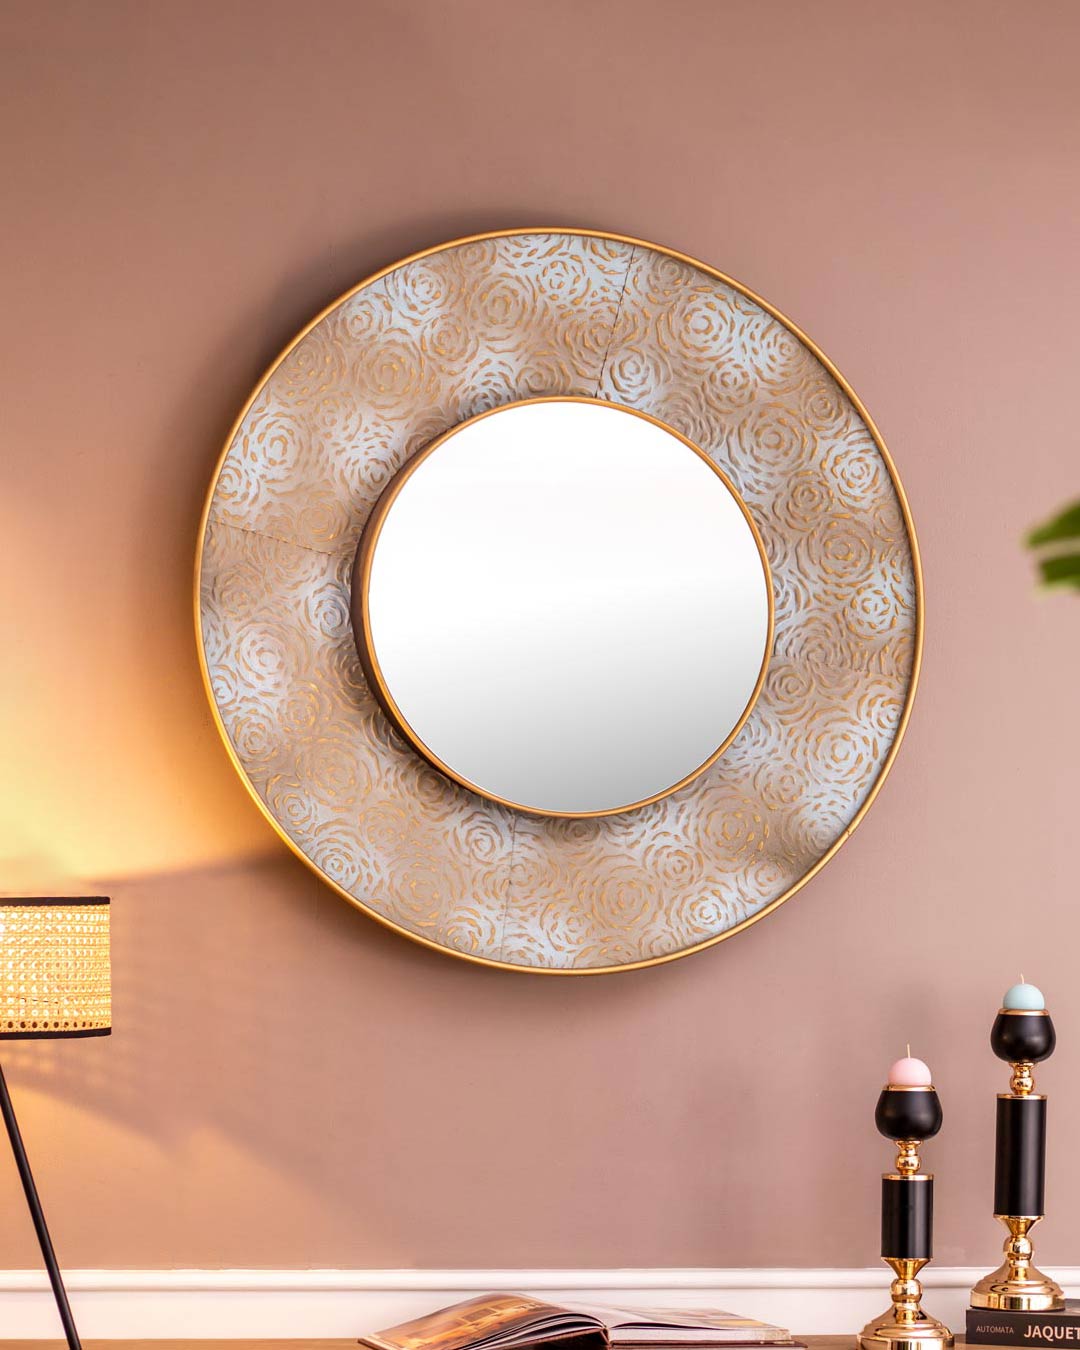 Moroccan Filigree Circles Wall Mirror with Elegant Gold Patterns.